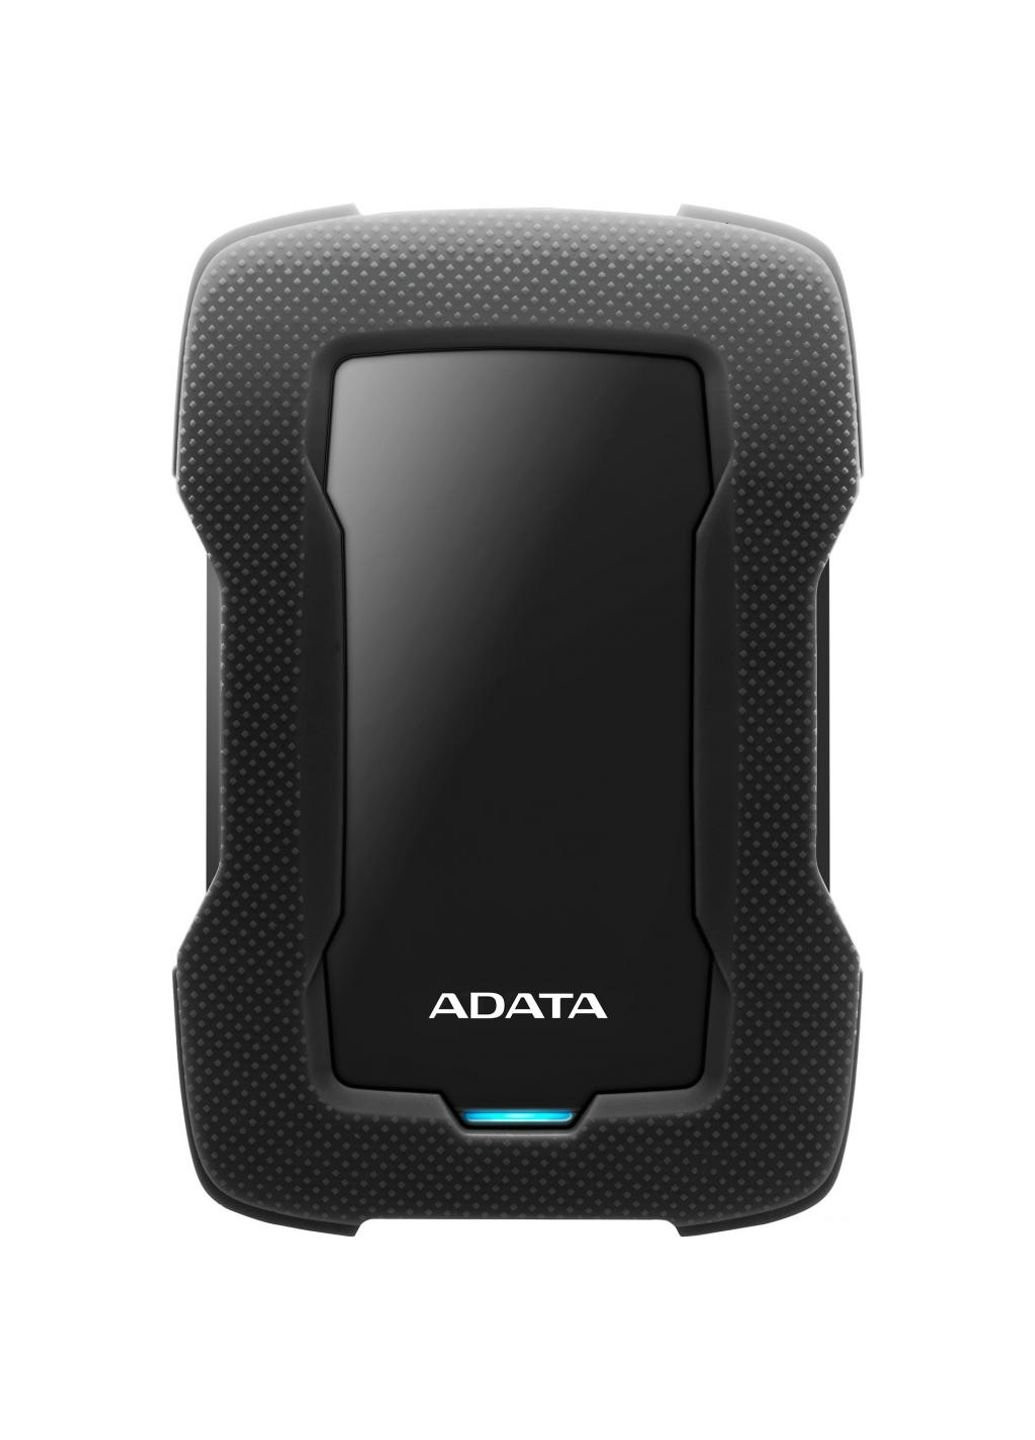 Внешний жесткий диск (AHD330-4TU31-CBK) ADATA 2.5" 4tb (250054662)